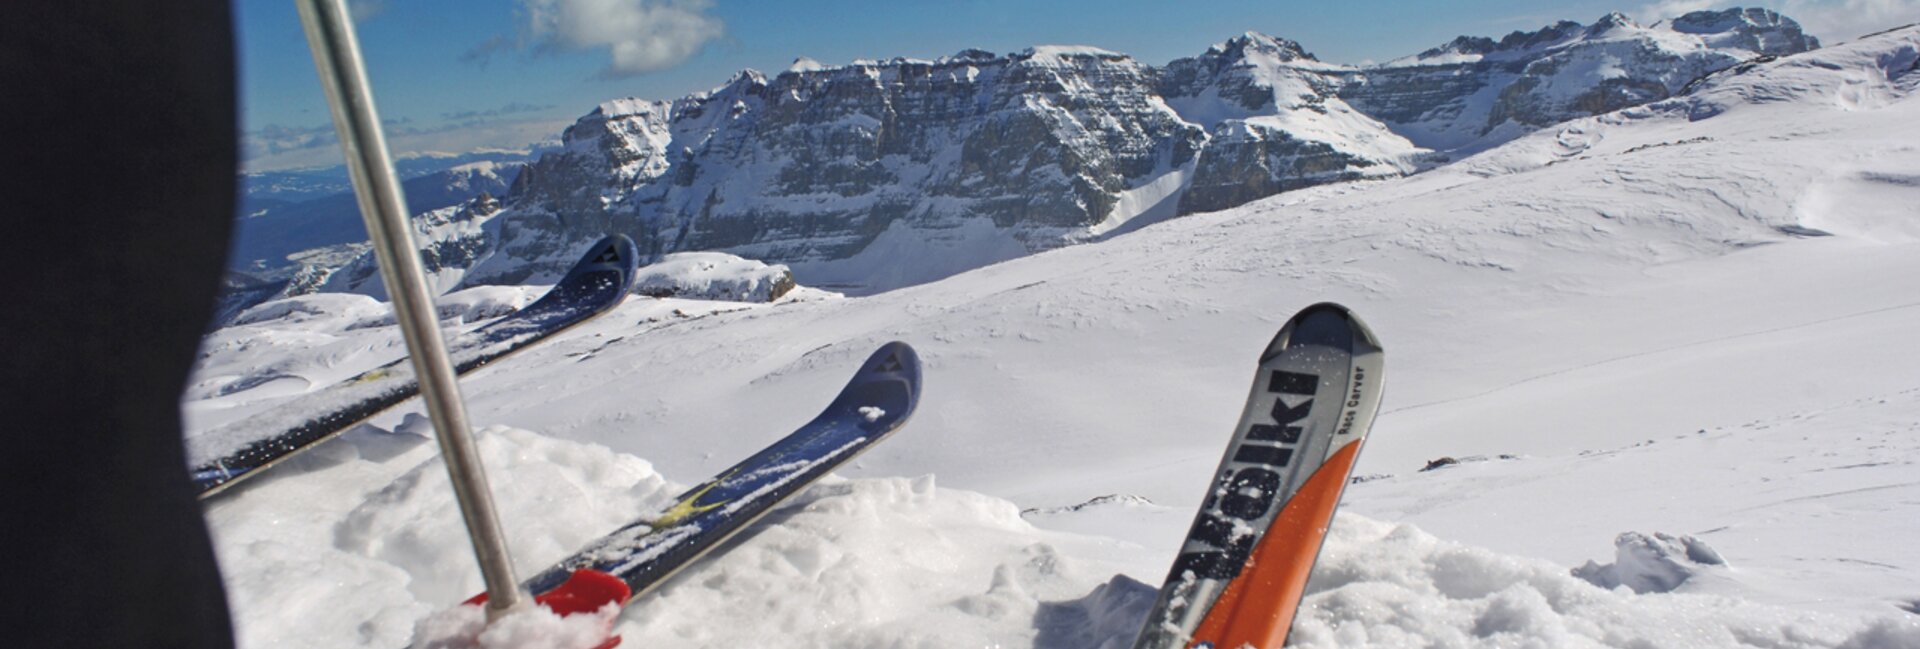 Skifahren im Skigebiet Madonna di Campiglio